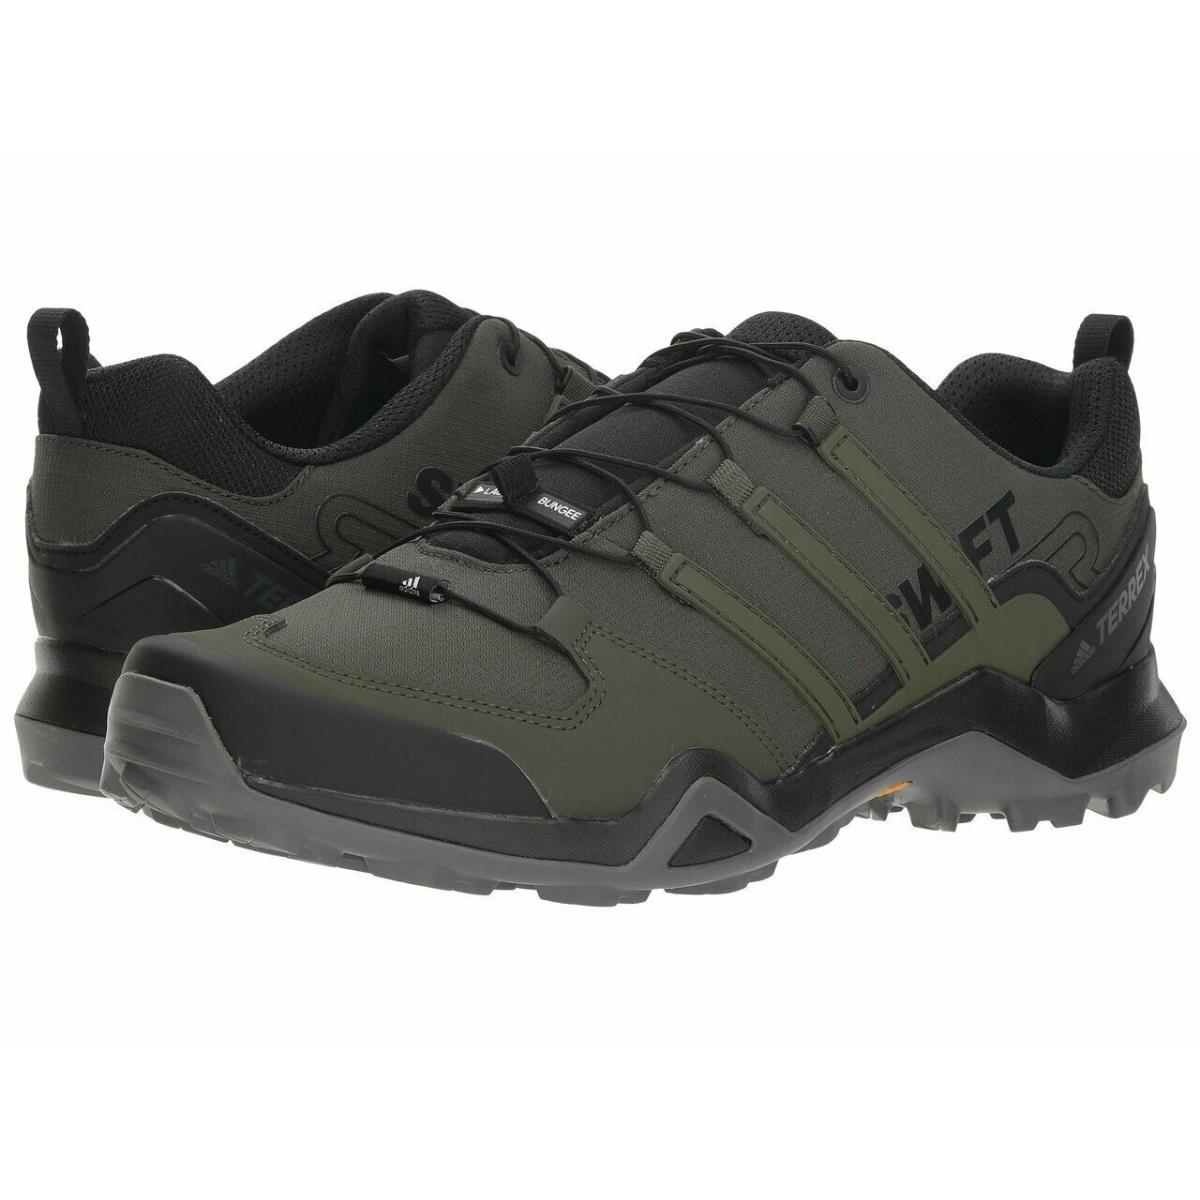 Adidas AC7983 Men`s Terrex Swift R2 Night Cargo / Base Green Hiking Shoes